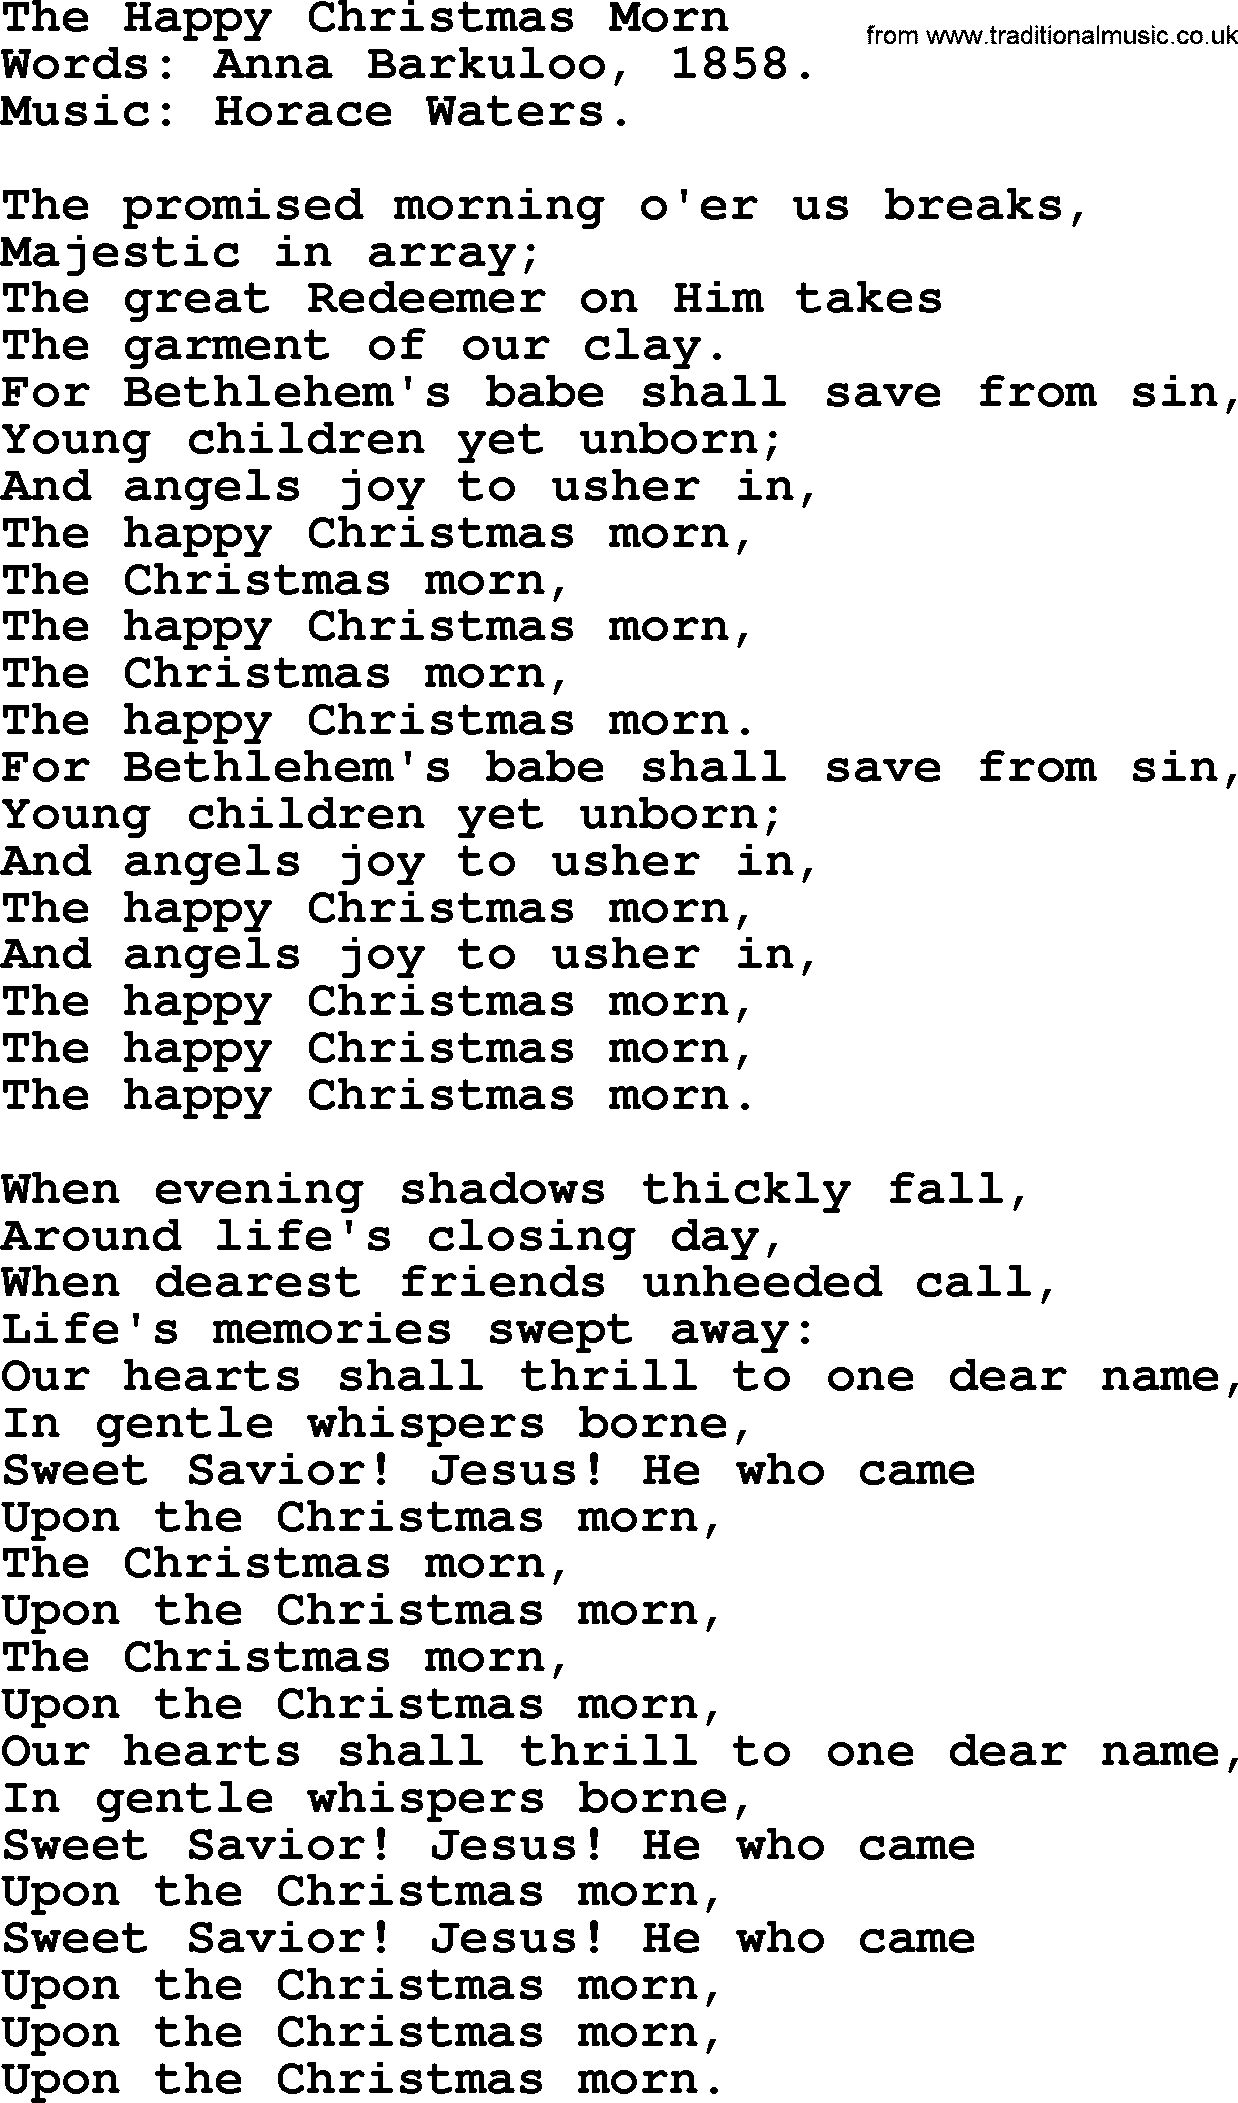 Christmas Hymns, Carols and Songs, title: The Happy Christmas Morn, lyrics with PDF